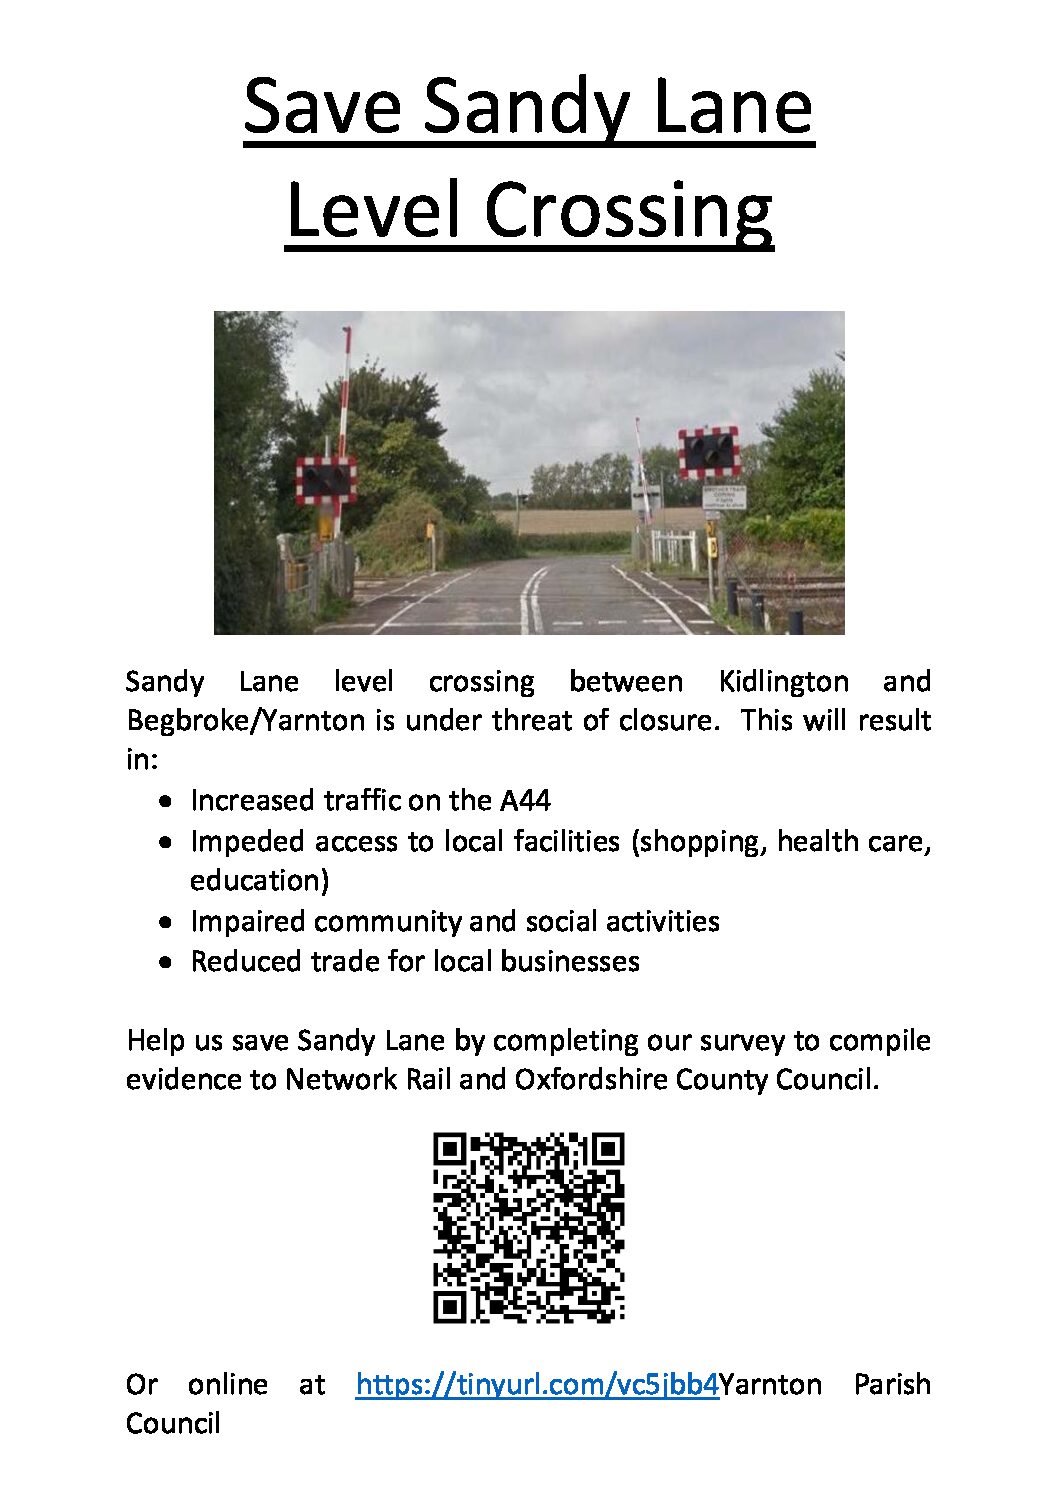 Closure of Sandy Lane Level Crossing